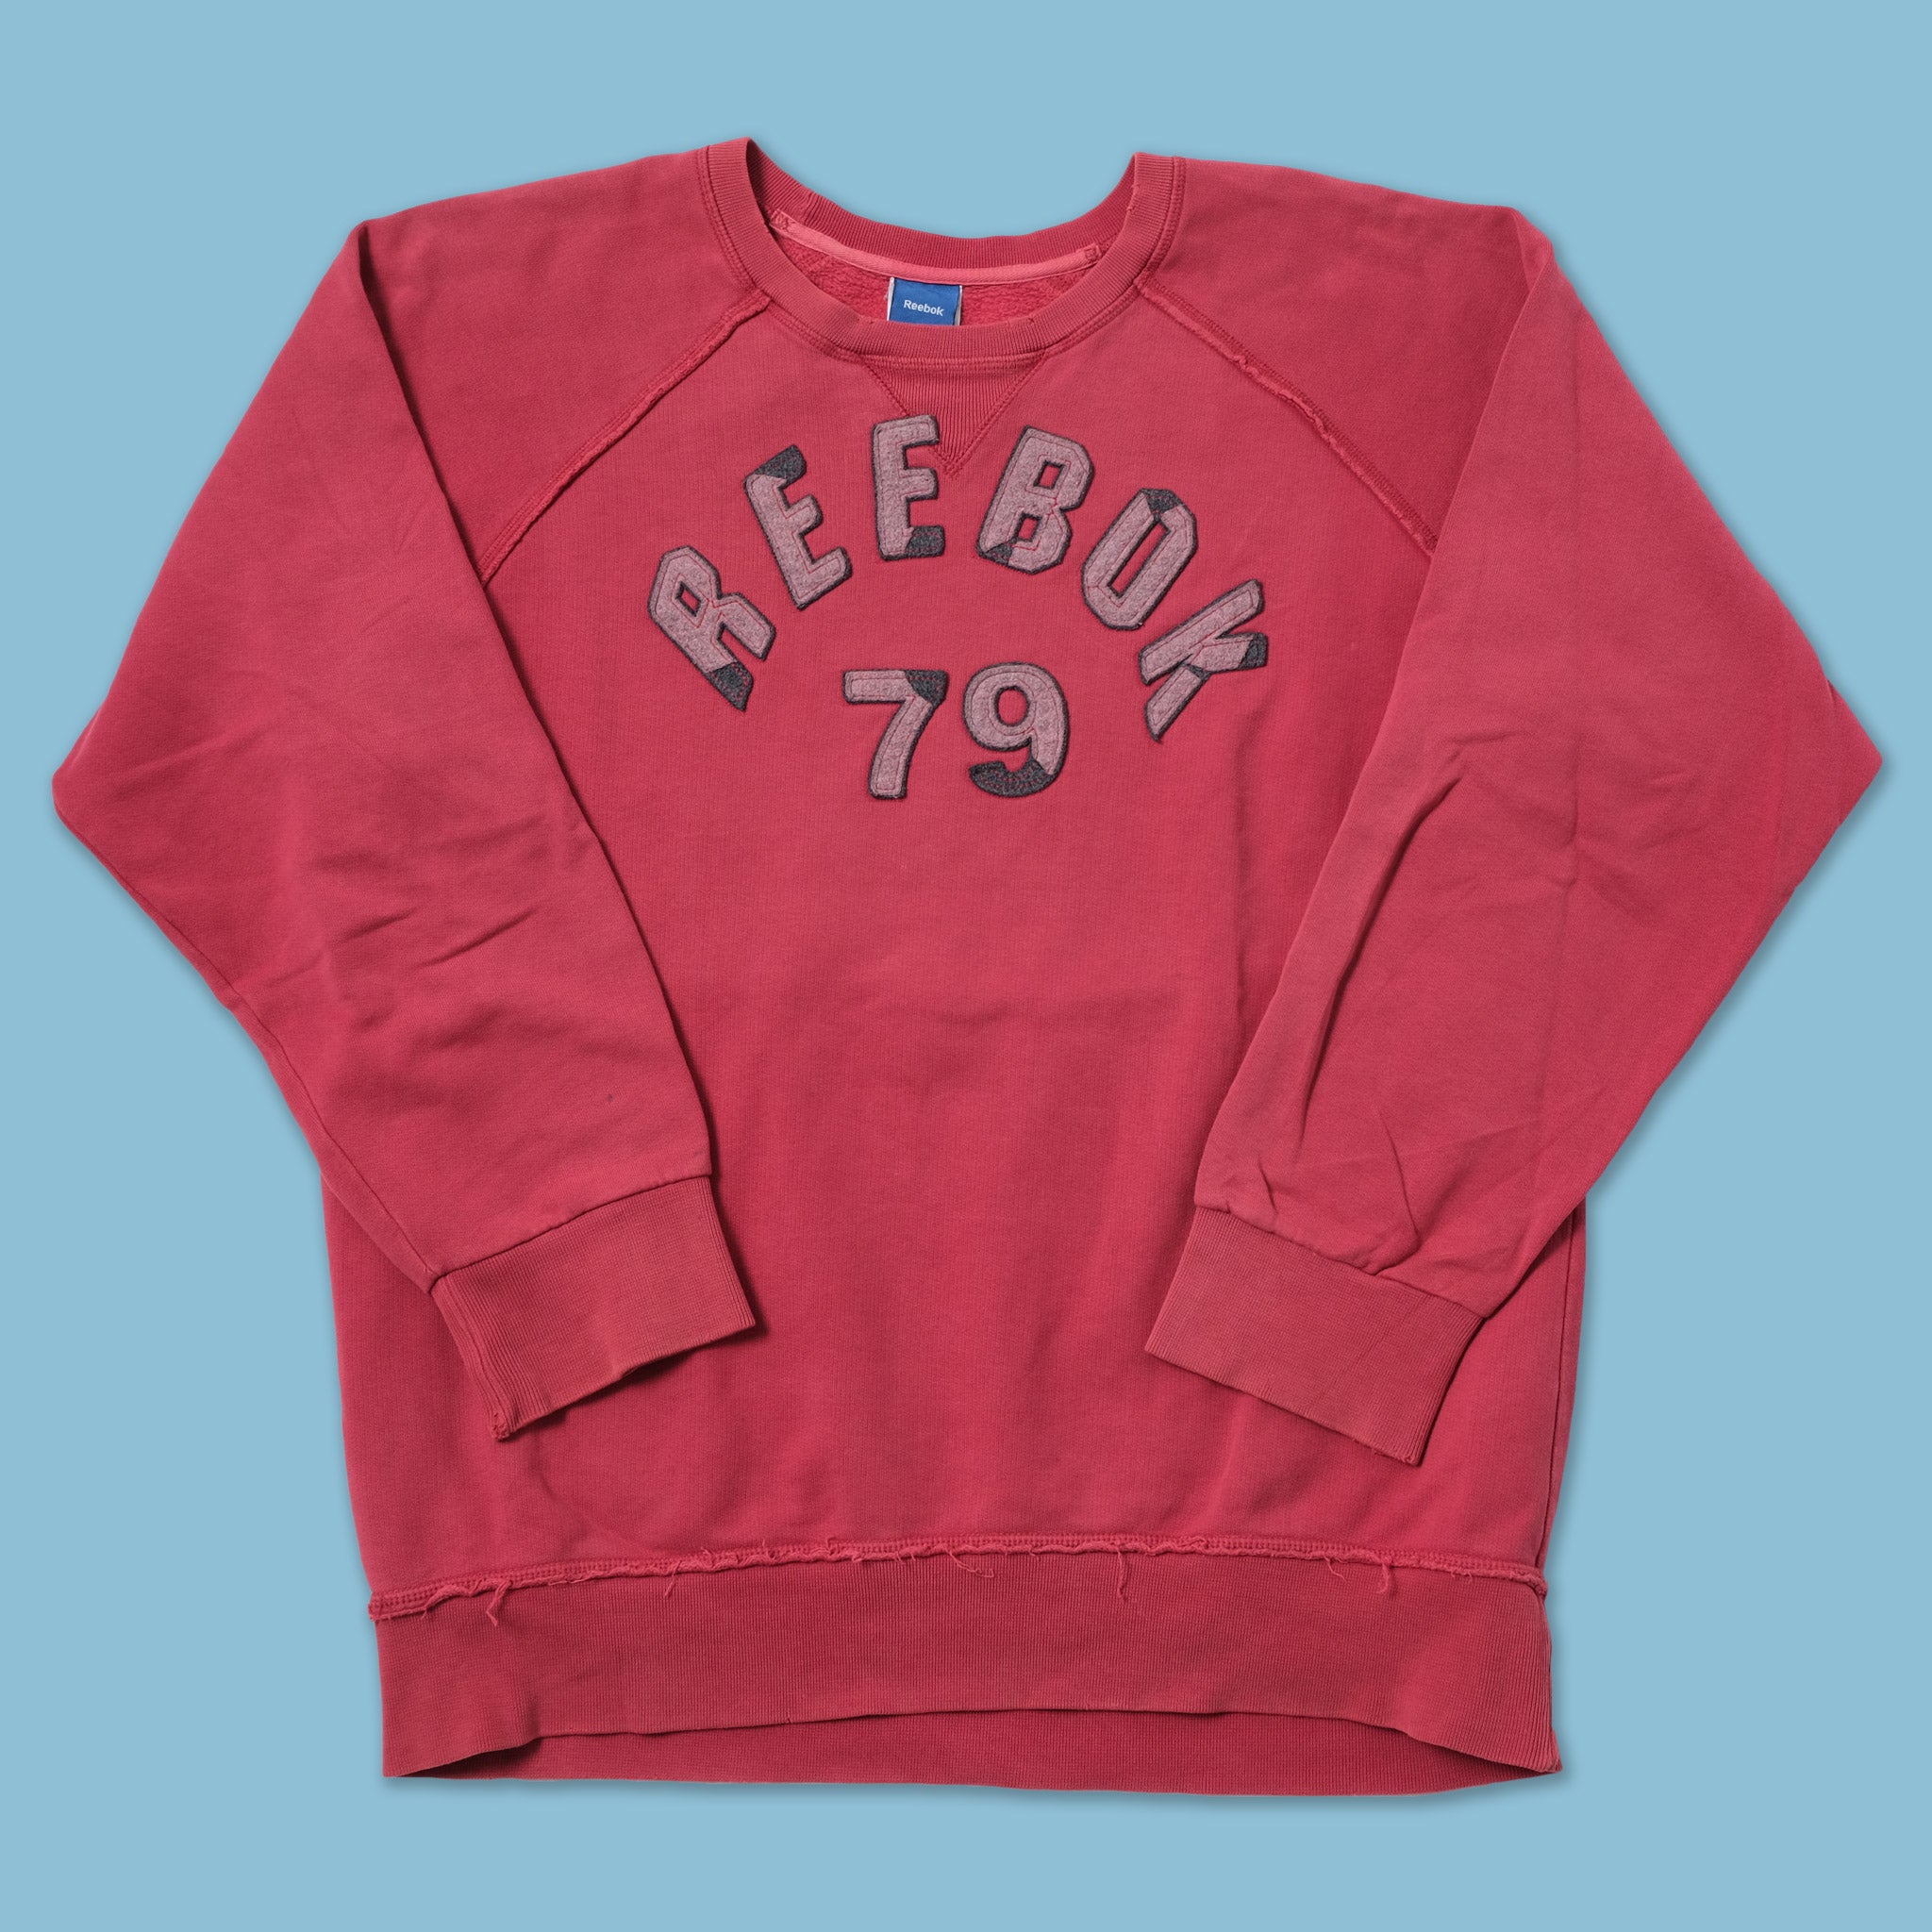 vintage reebok sweater